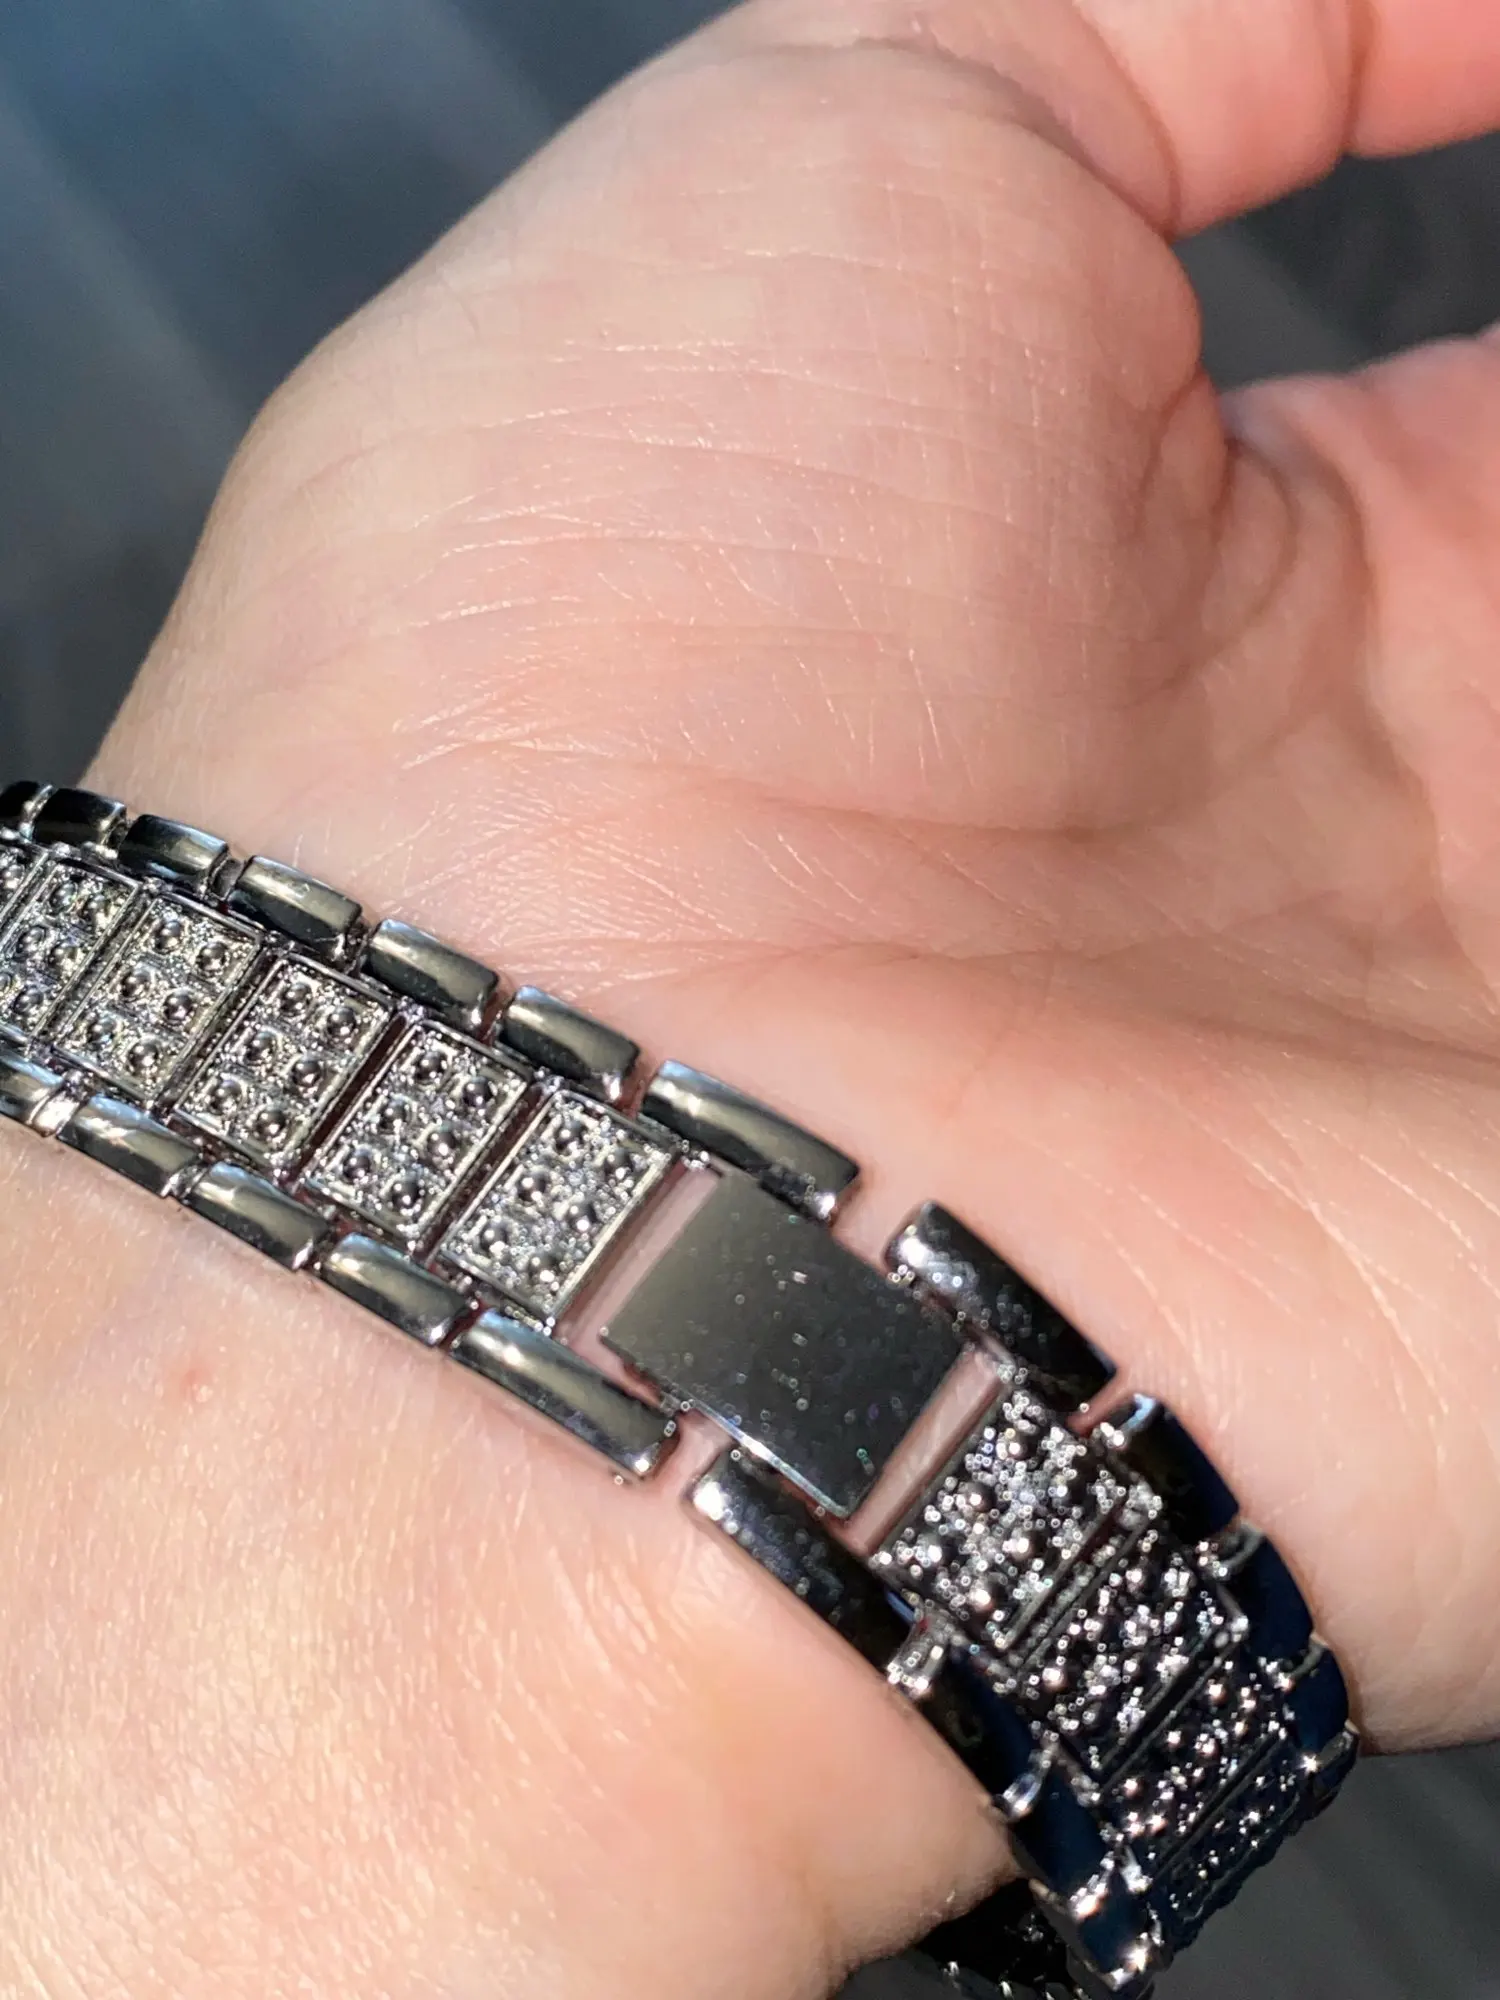 Luxury Diamond Watch for Women, Quartz, Pink Gold, Shiny Crystal, Trendy photo review